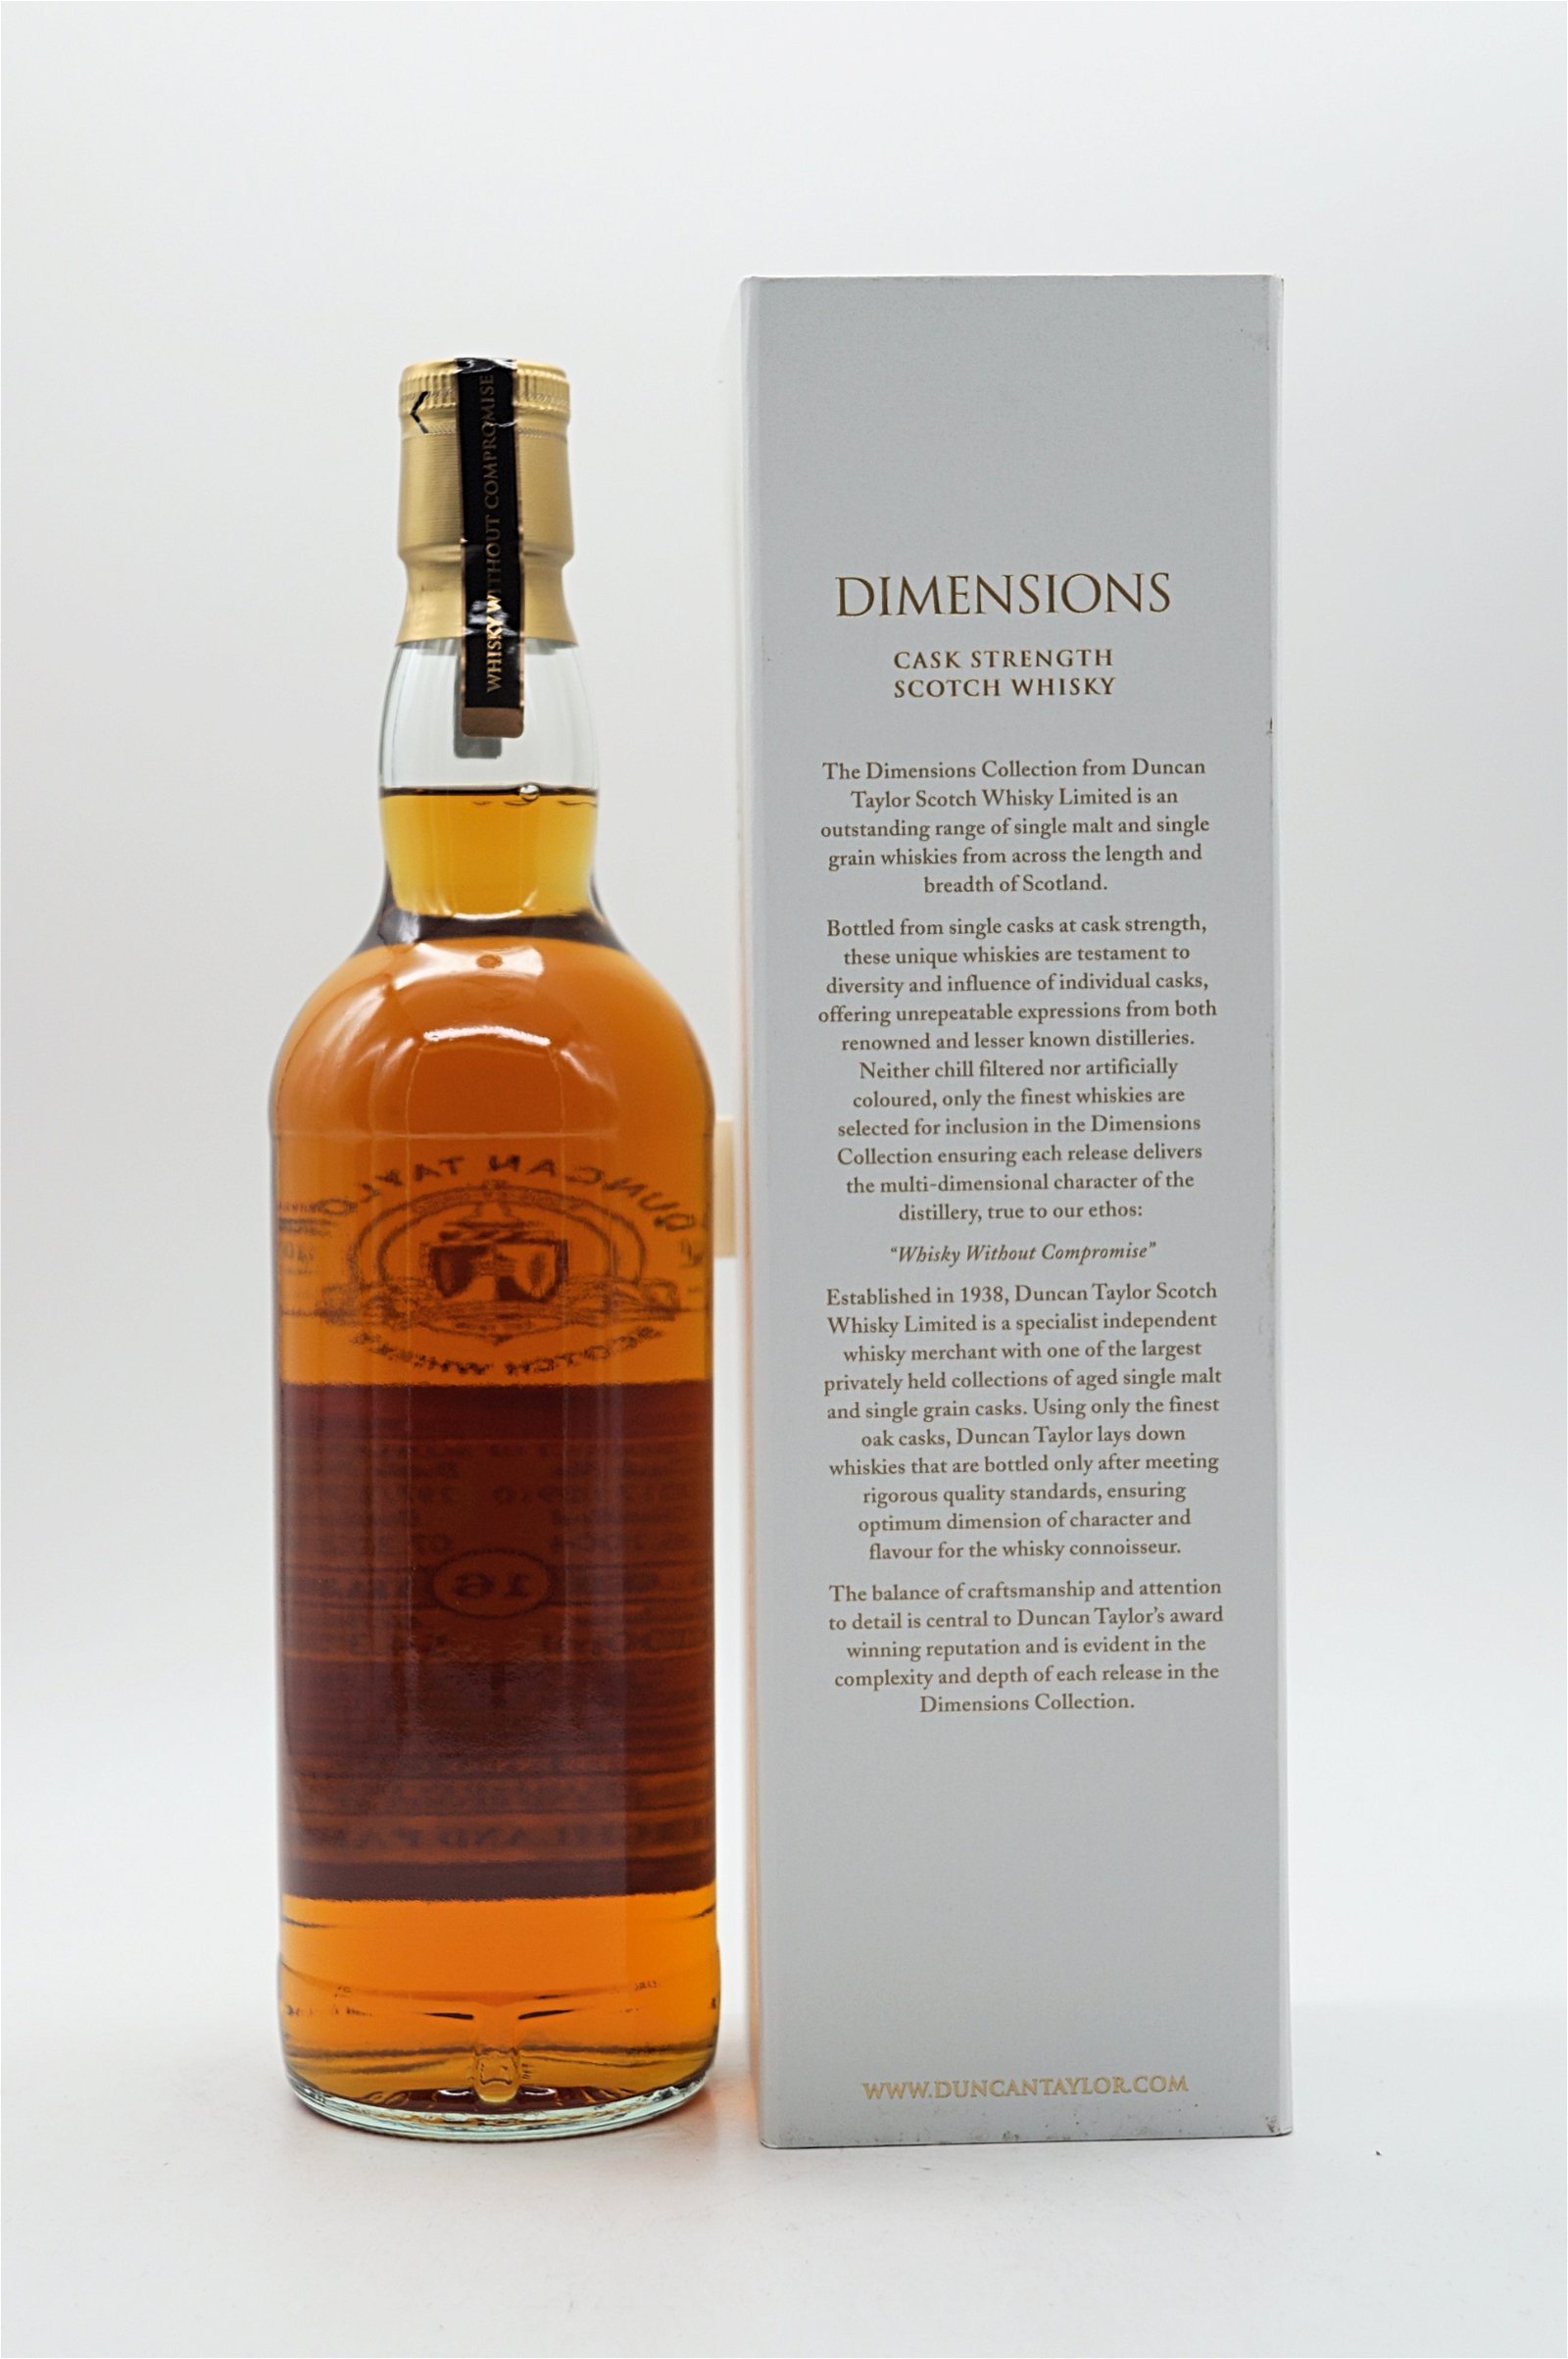 Duncan Taylor Dimensions Highland Park 16 Jahre 2004/2020 Cask Strength Scotch Whisky 